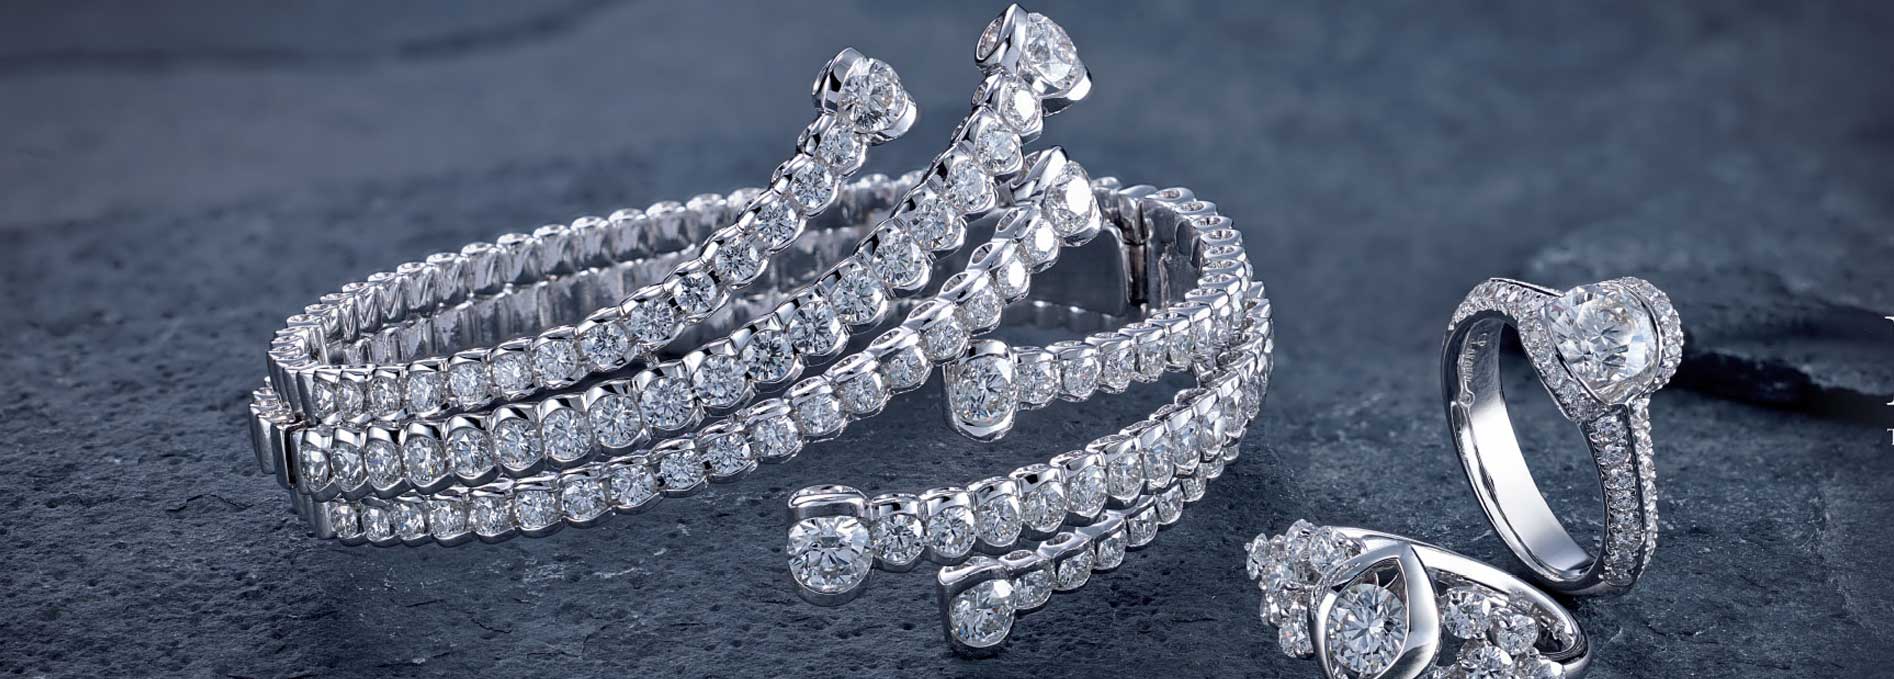 Royale Diamonds, Near Telephone Exchange, Bajirao Road, Pune | Diamond Jewellery  Manufacturer